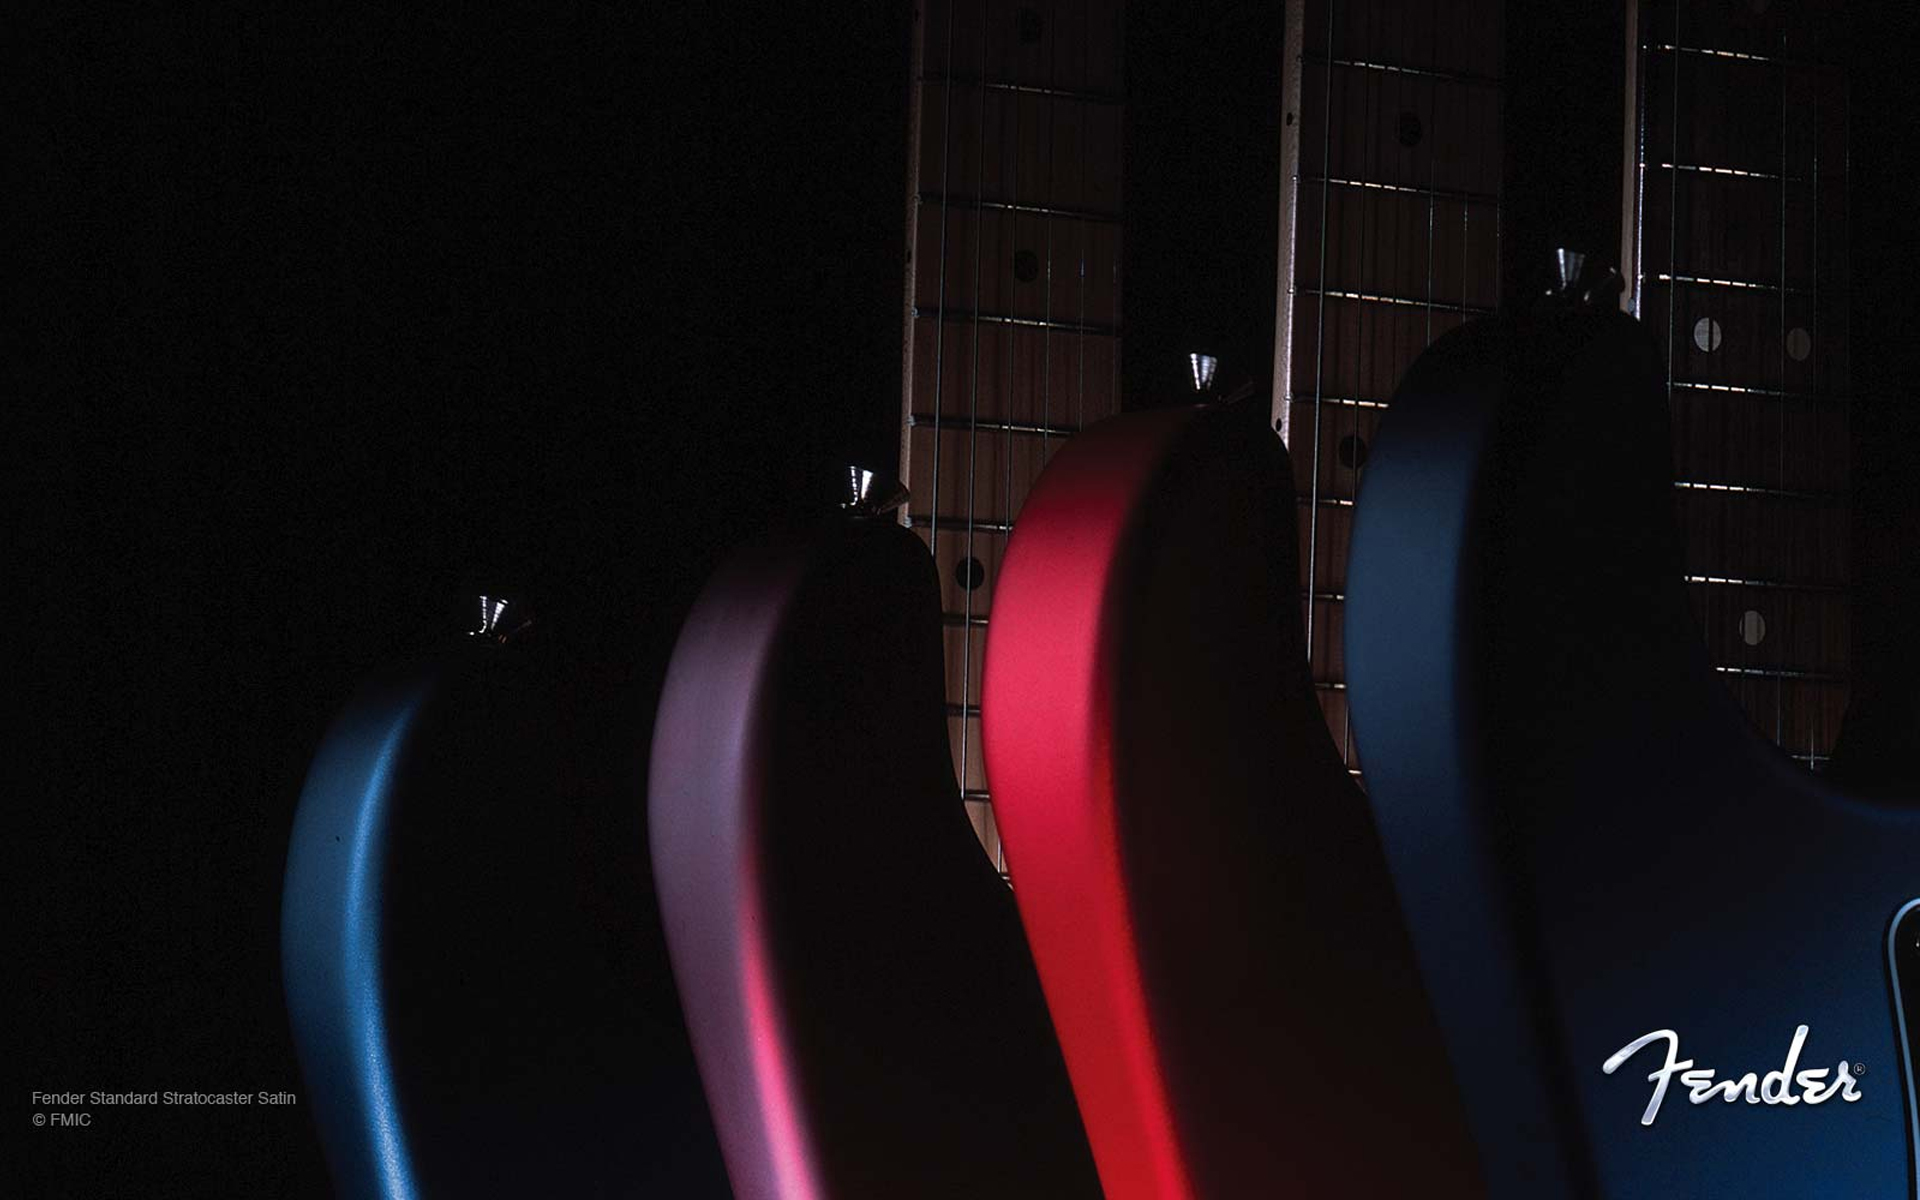 Fender Stratocaster Wallpaper 44 pictures